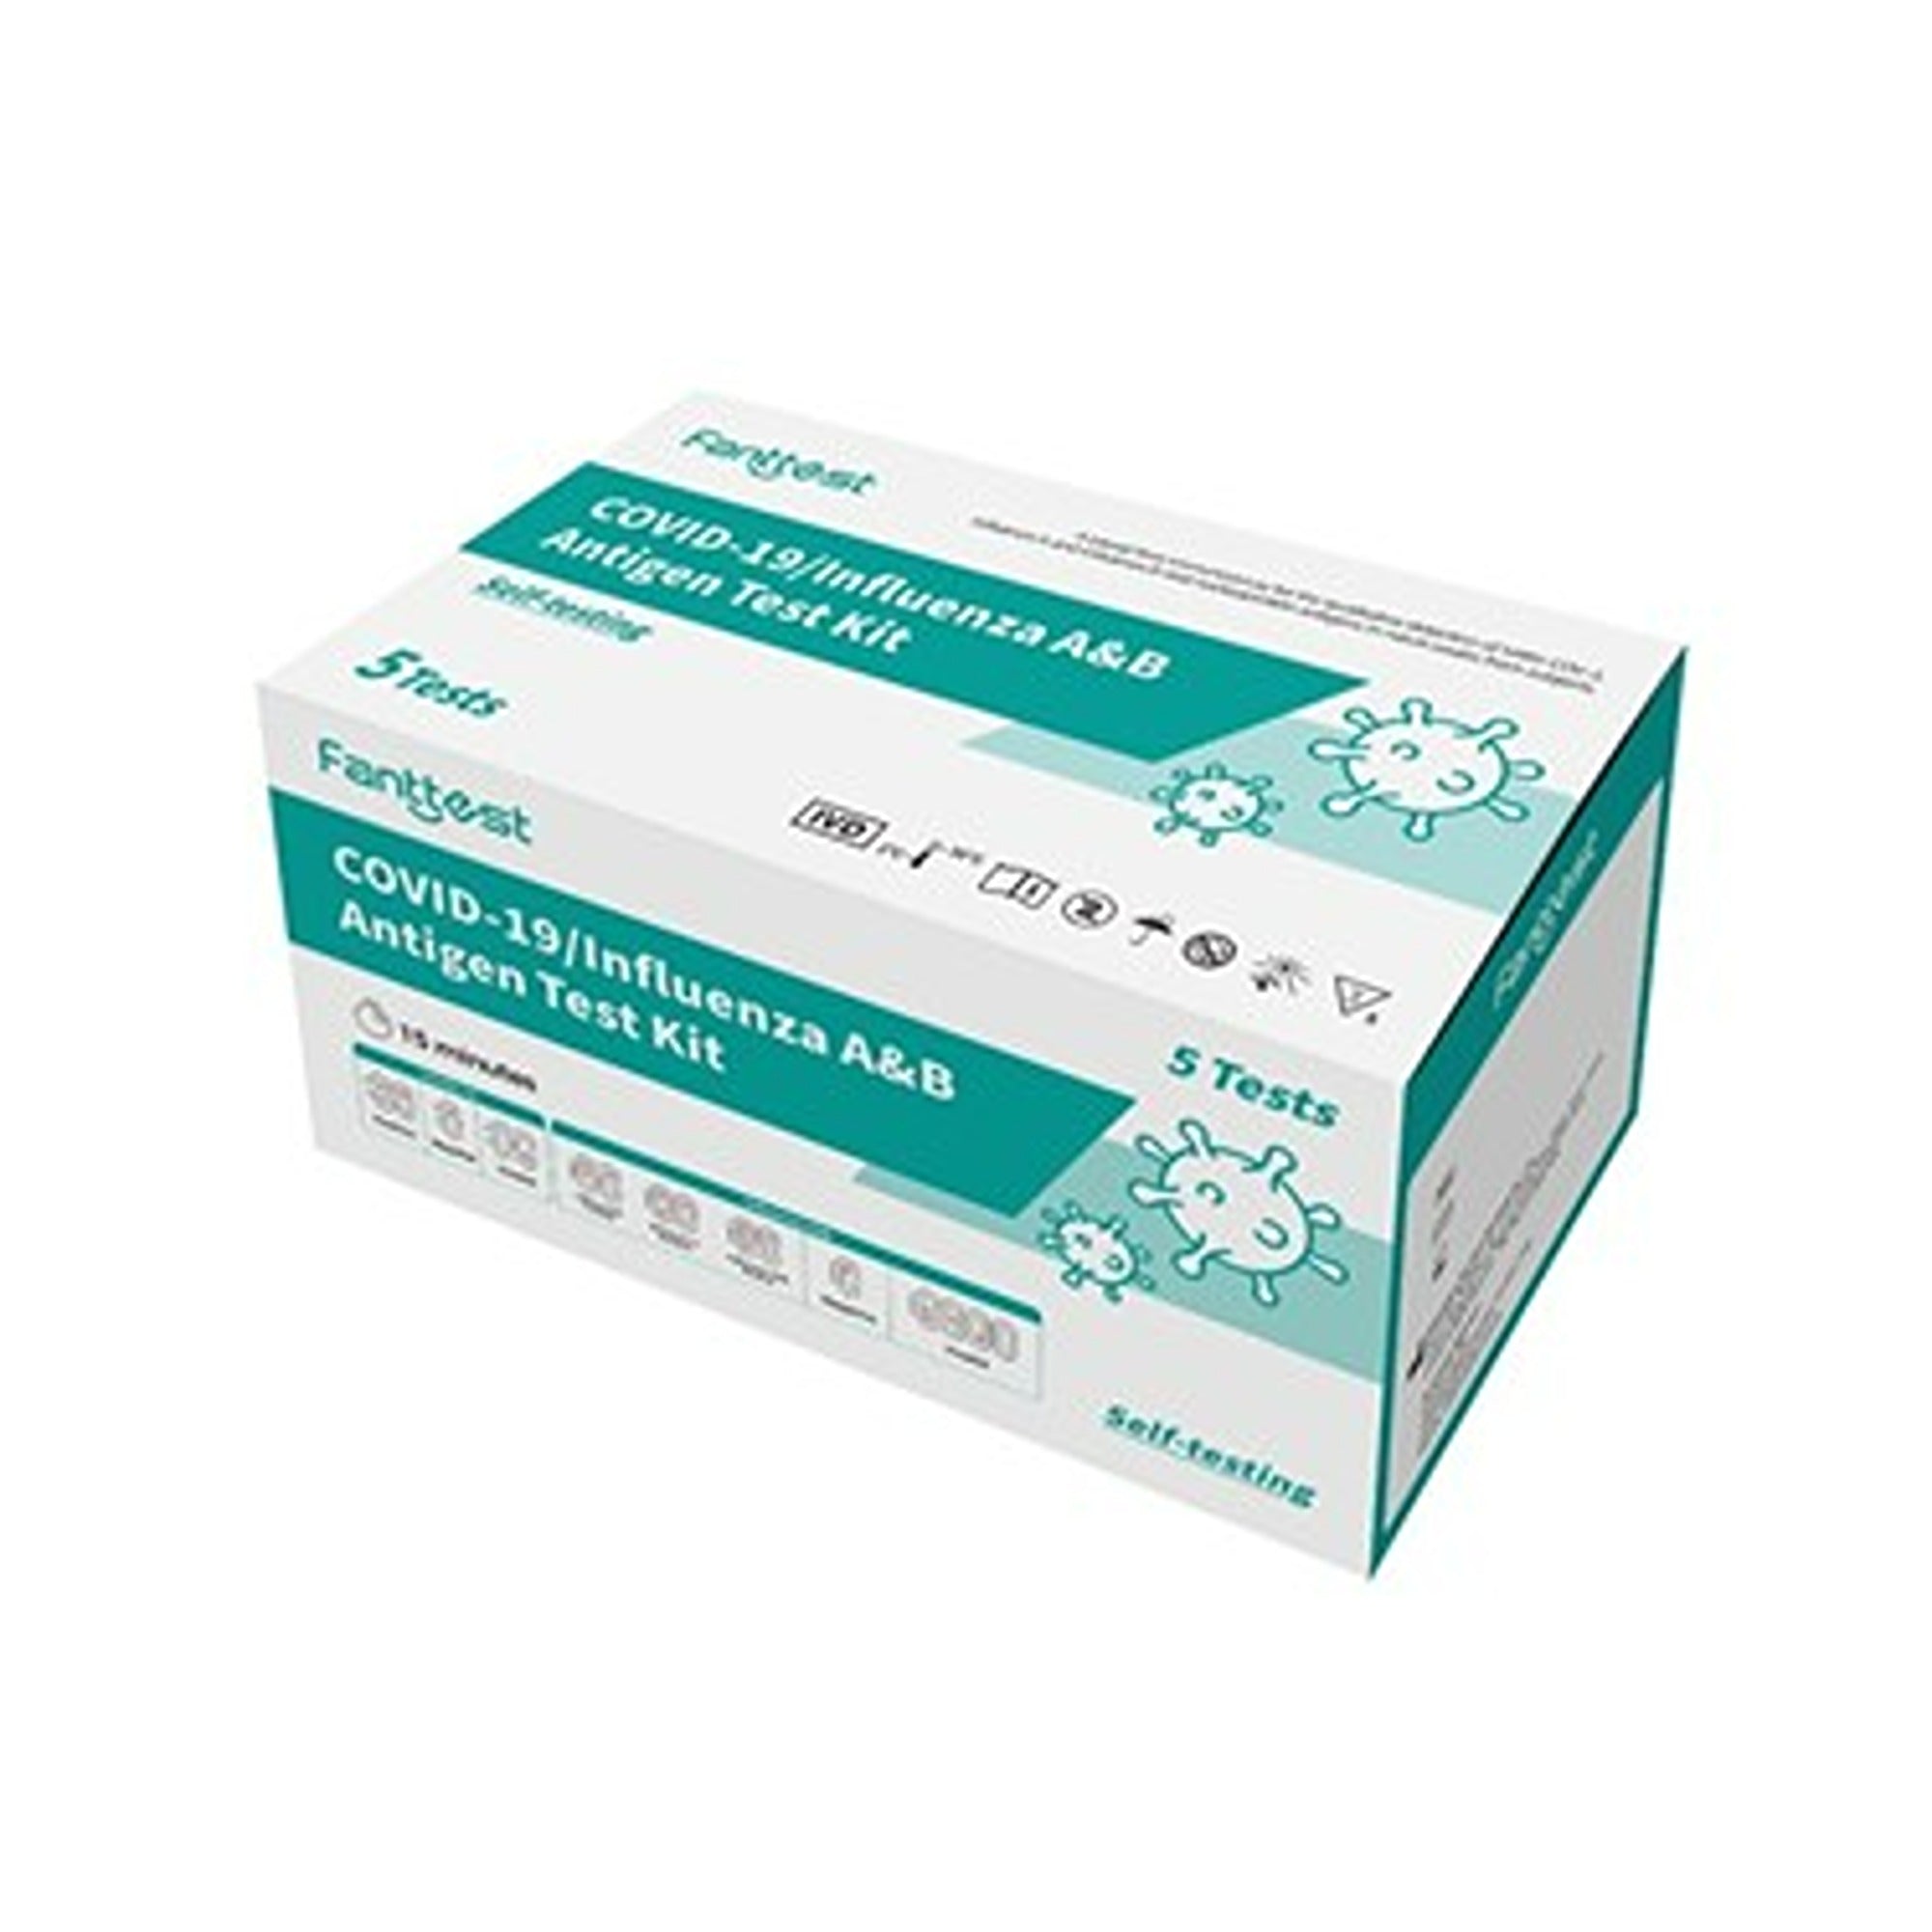 Fanttest COVID-19/Influenza A&B Antigen Test Kit - 10 test